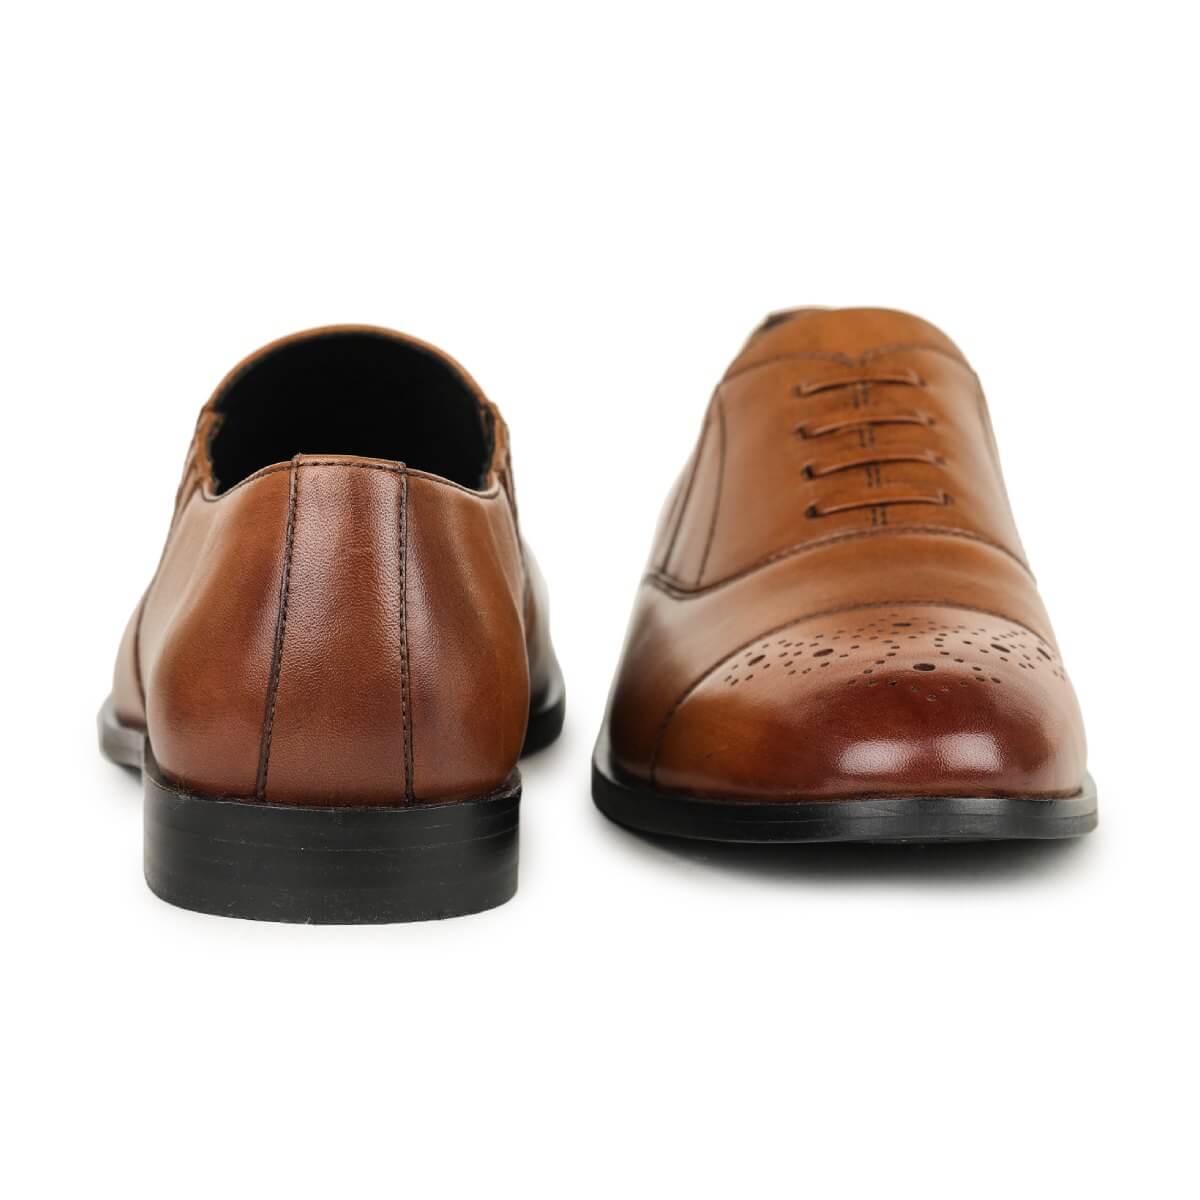  brogue shoes formal tan2